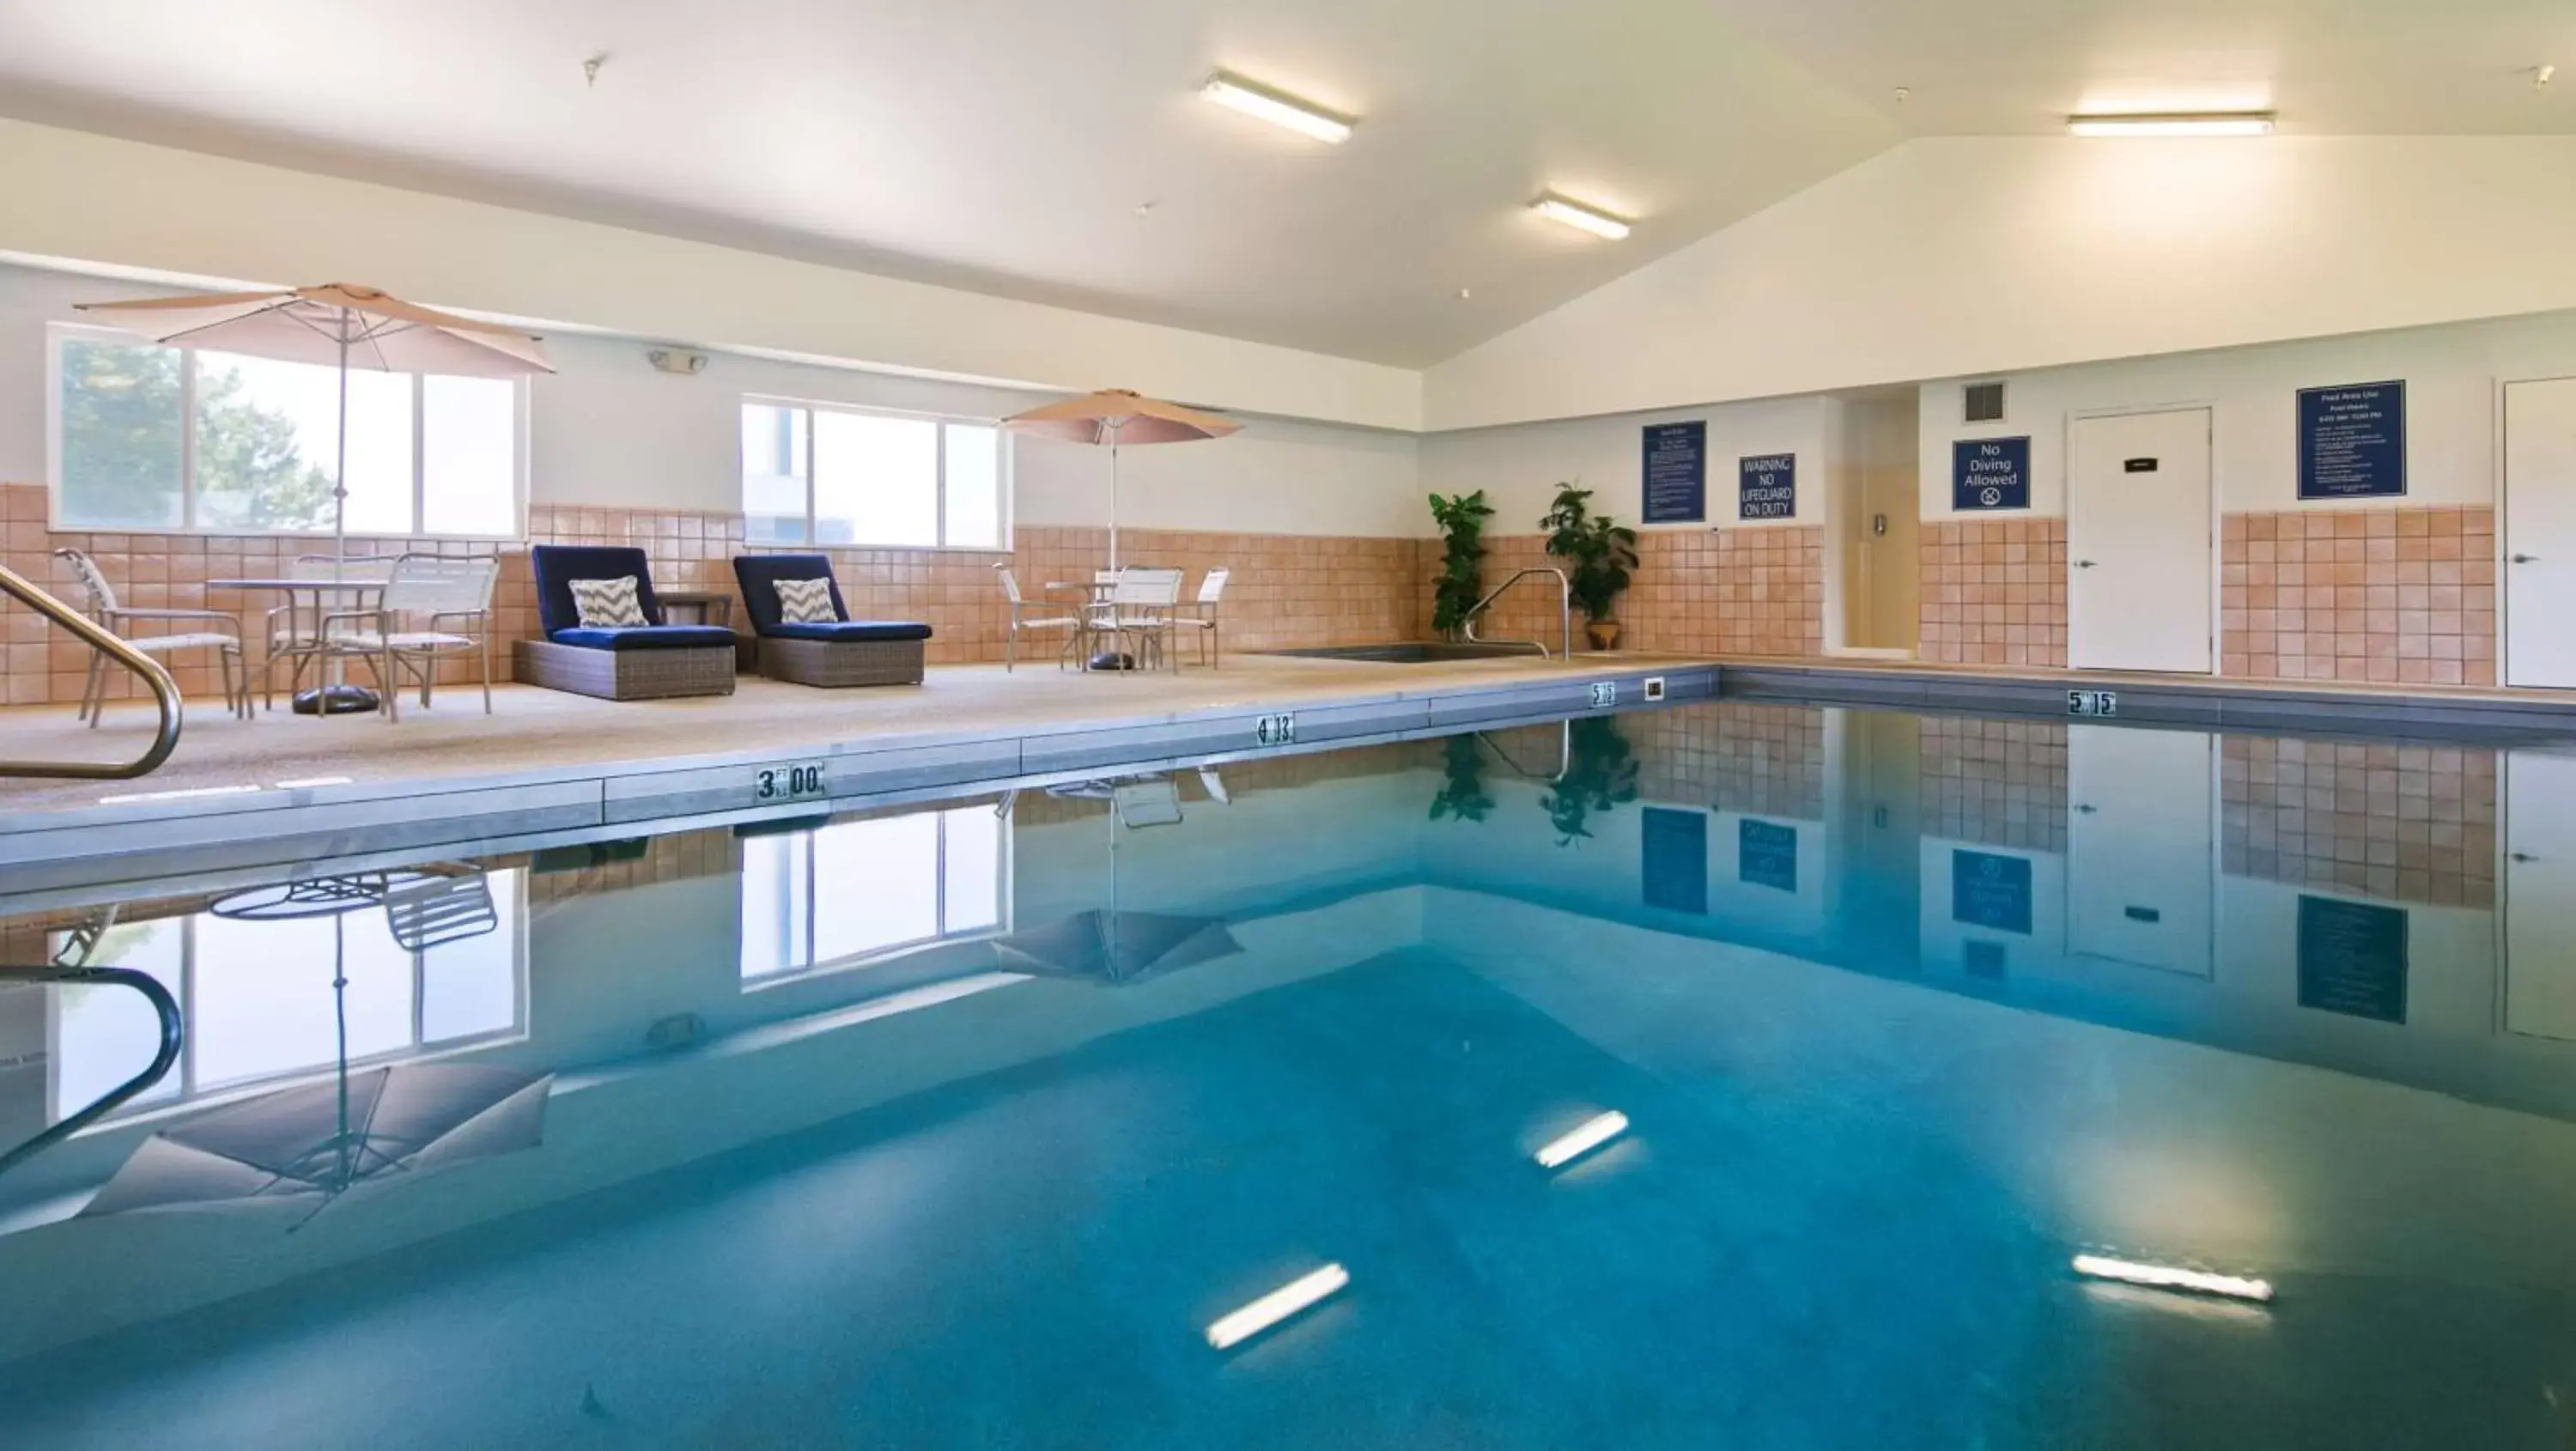 On site, Swimming Pool in Best Western Vermillion Inn